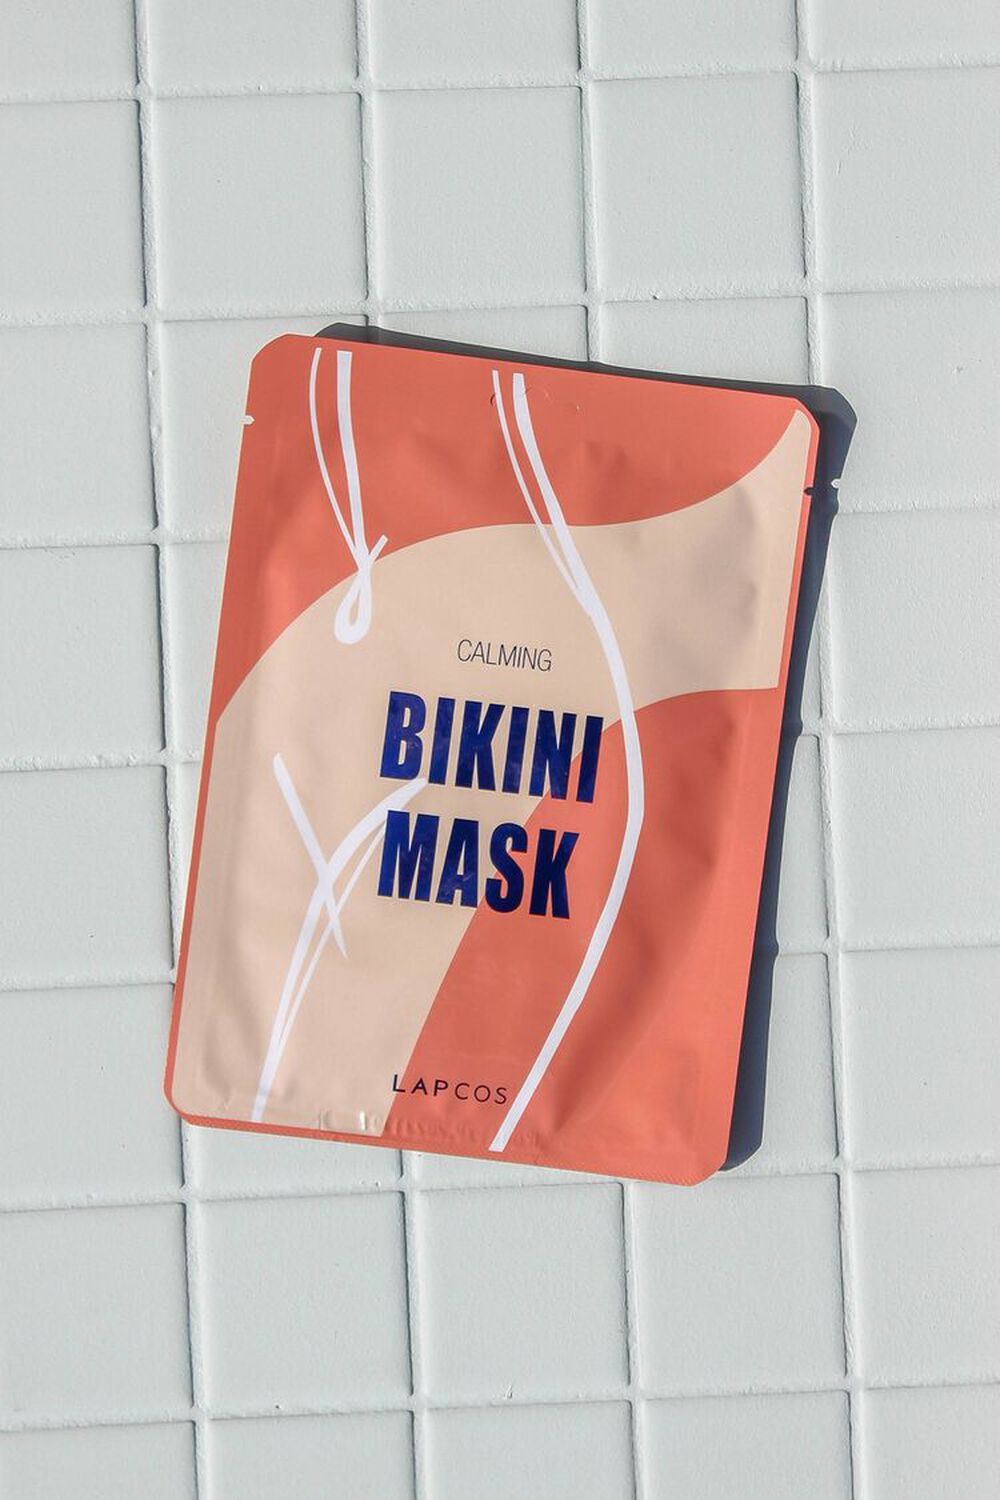 Calming LAPCOS Calming Bikini Mask, image 1